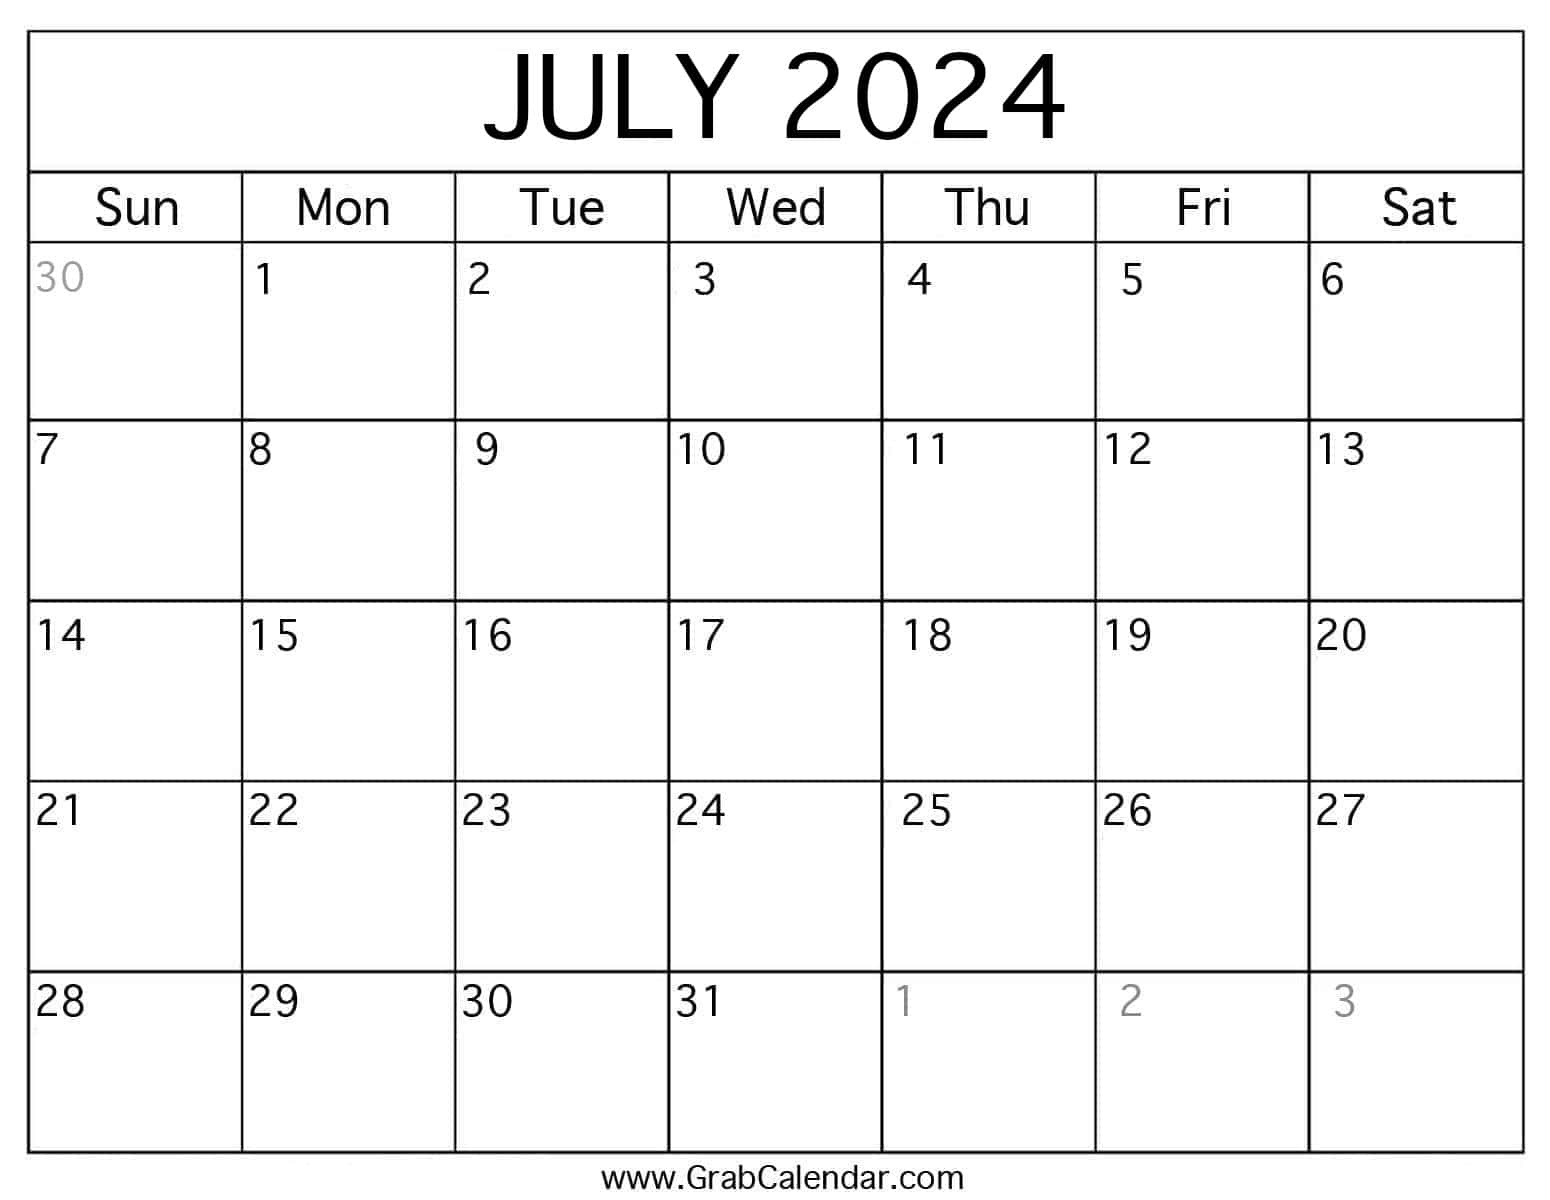 Printable July 2024 Calendar intended for Show Calendar For July 2024